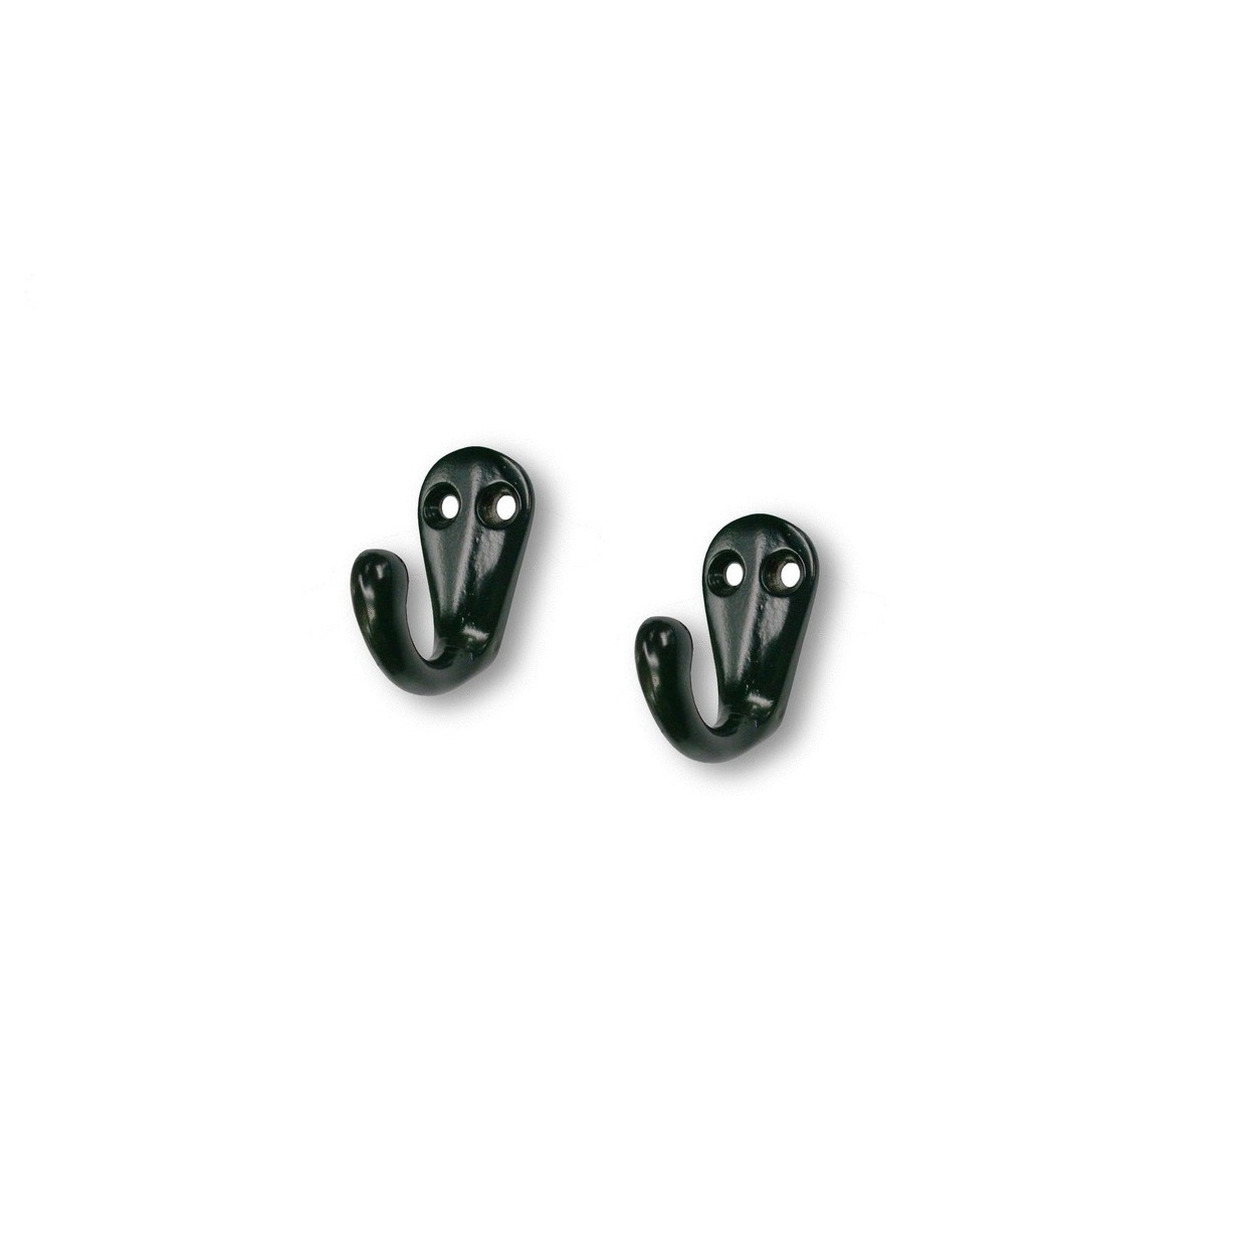 1x Luxe kapstokhaken-jashaken-kapstokhaakjes zwart van hoogwaardig metaal 3,3 x 4,1 cm